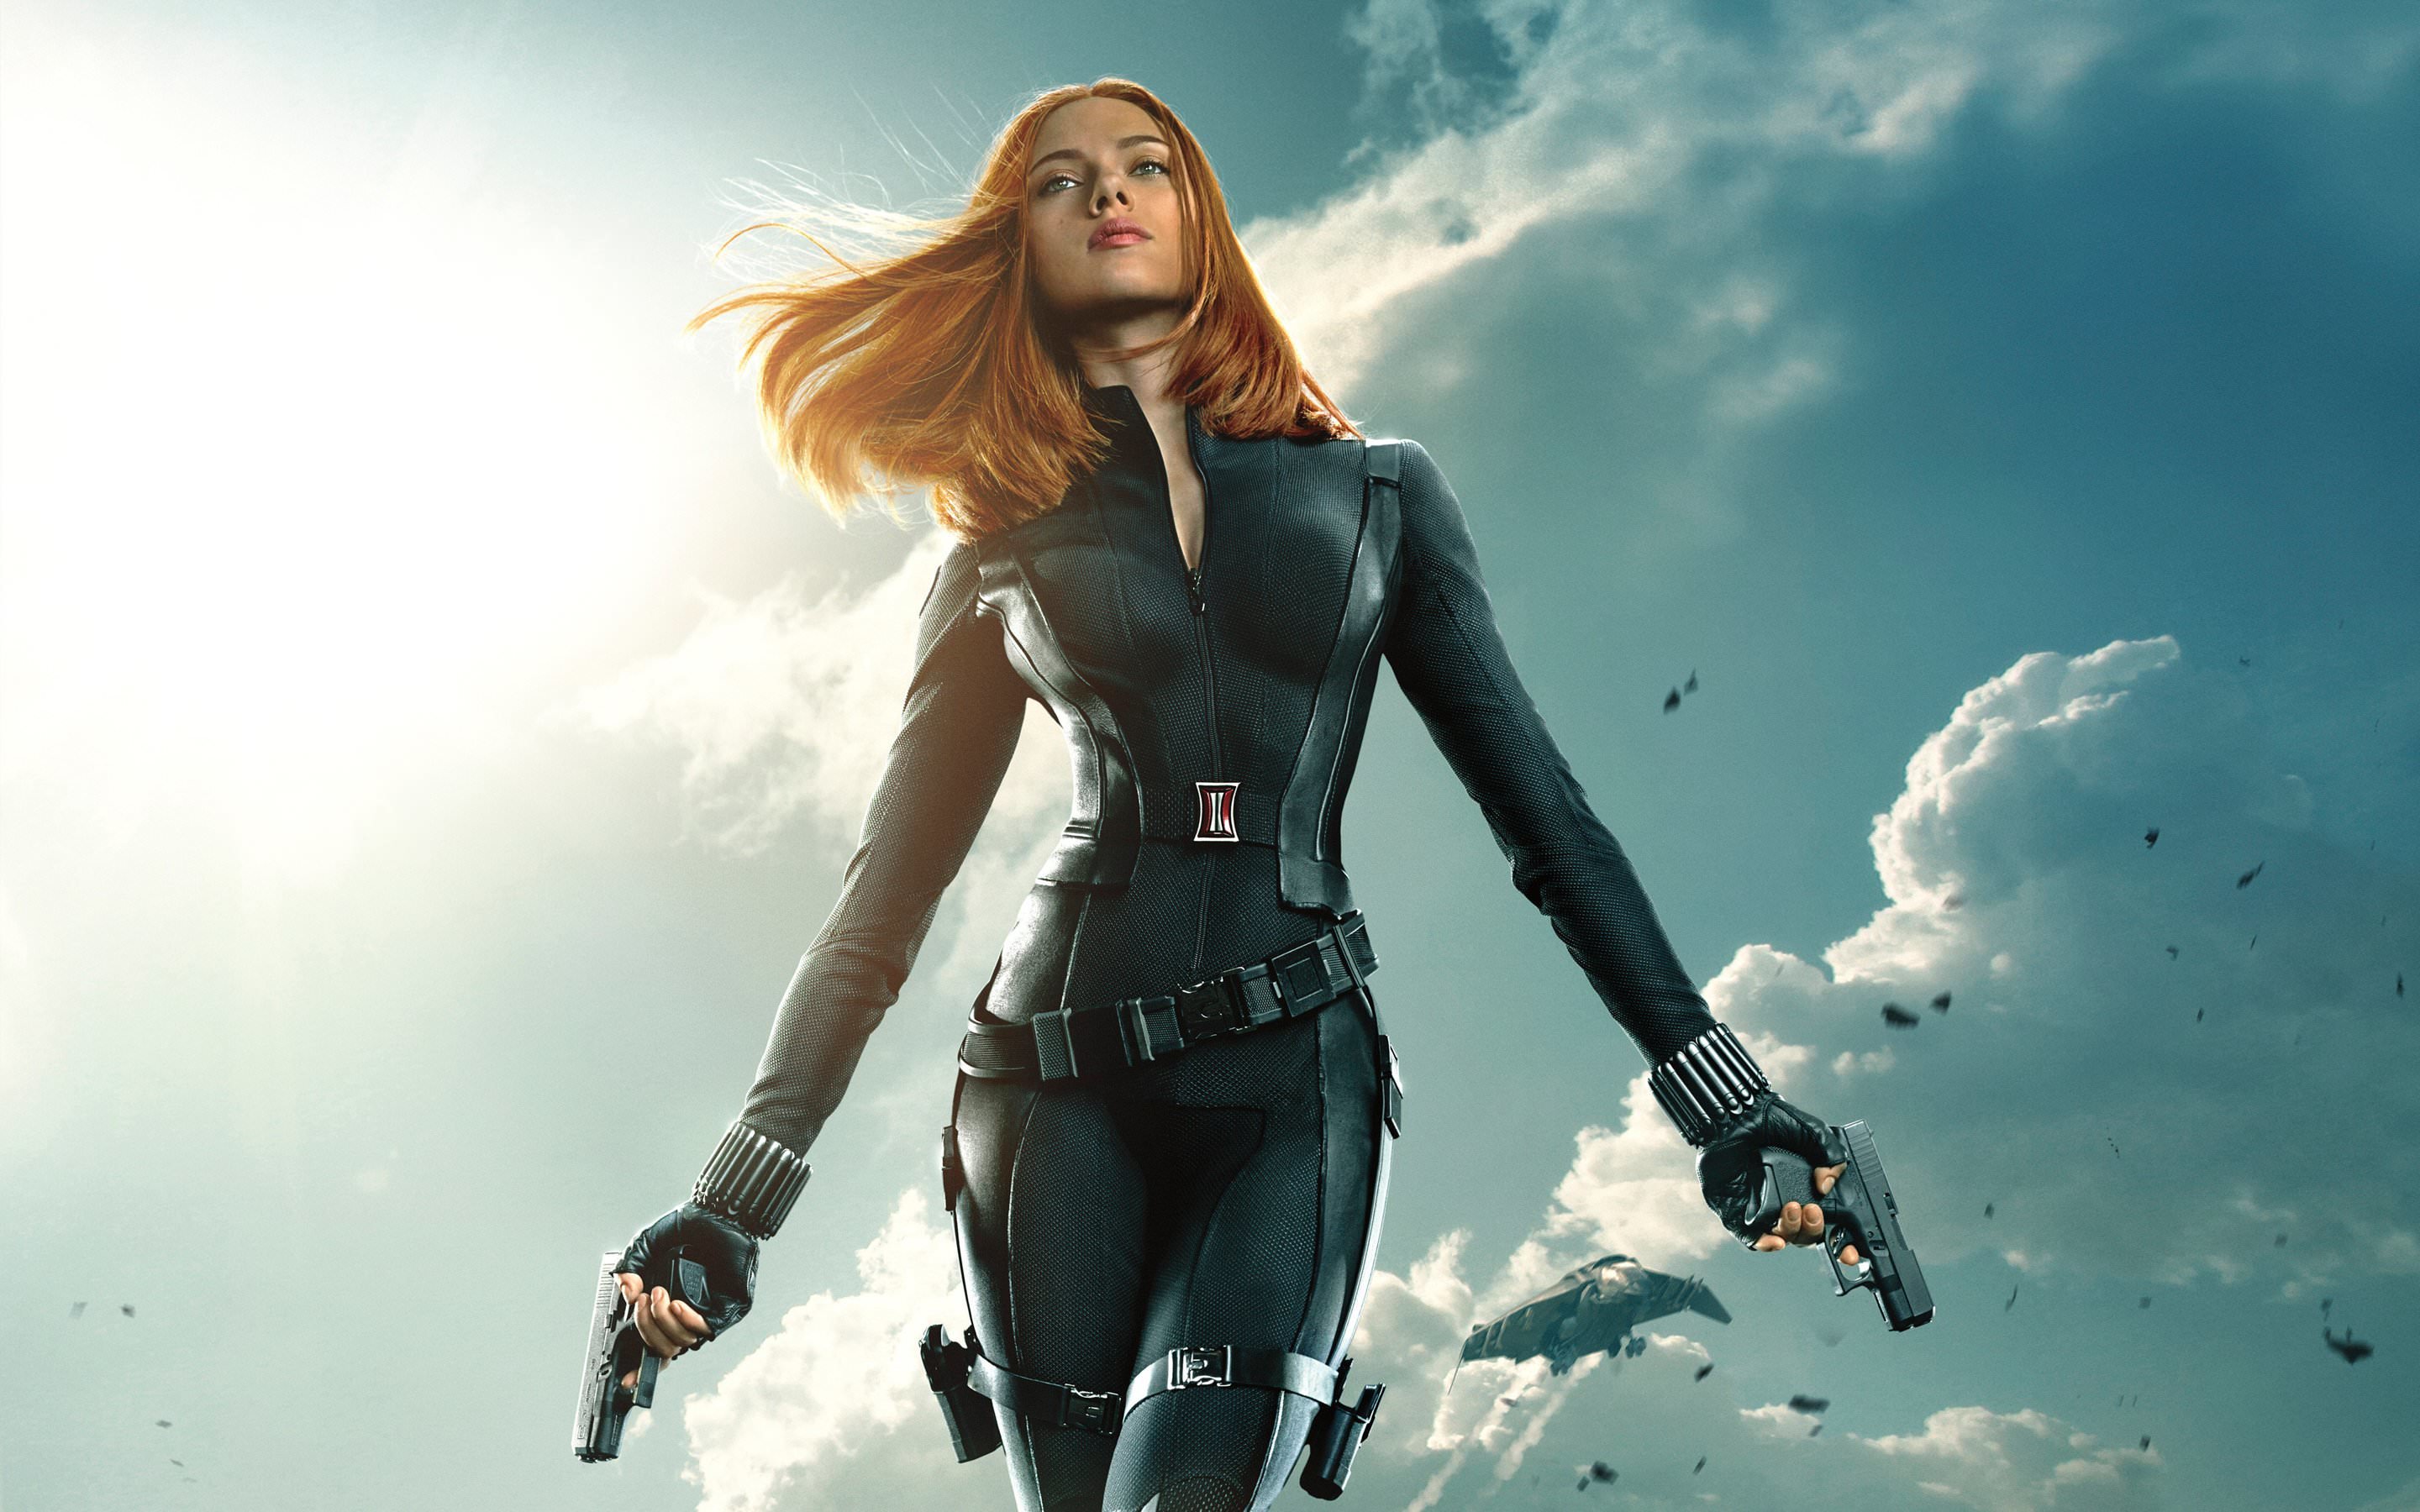 Scarlett Johansson in "Captain America: The Winter Soldier" Wallpaper for Desktop 2880x1800